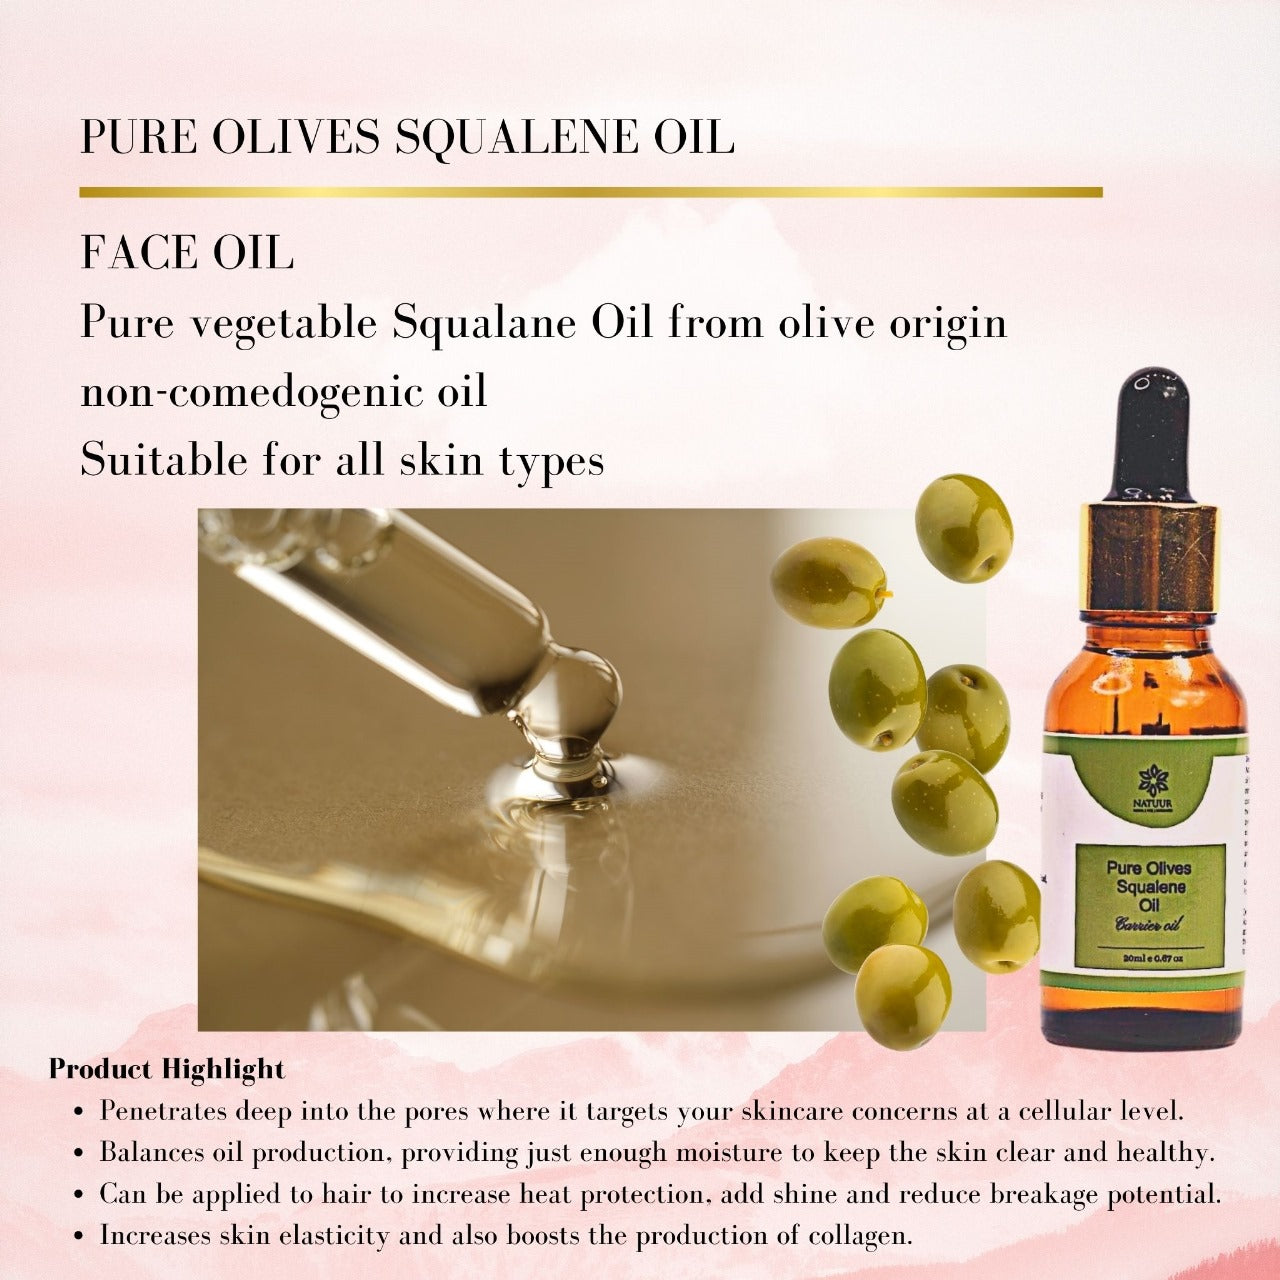 Pure Olive Squalene Oil